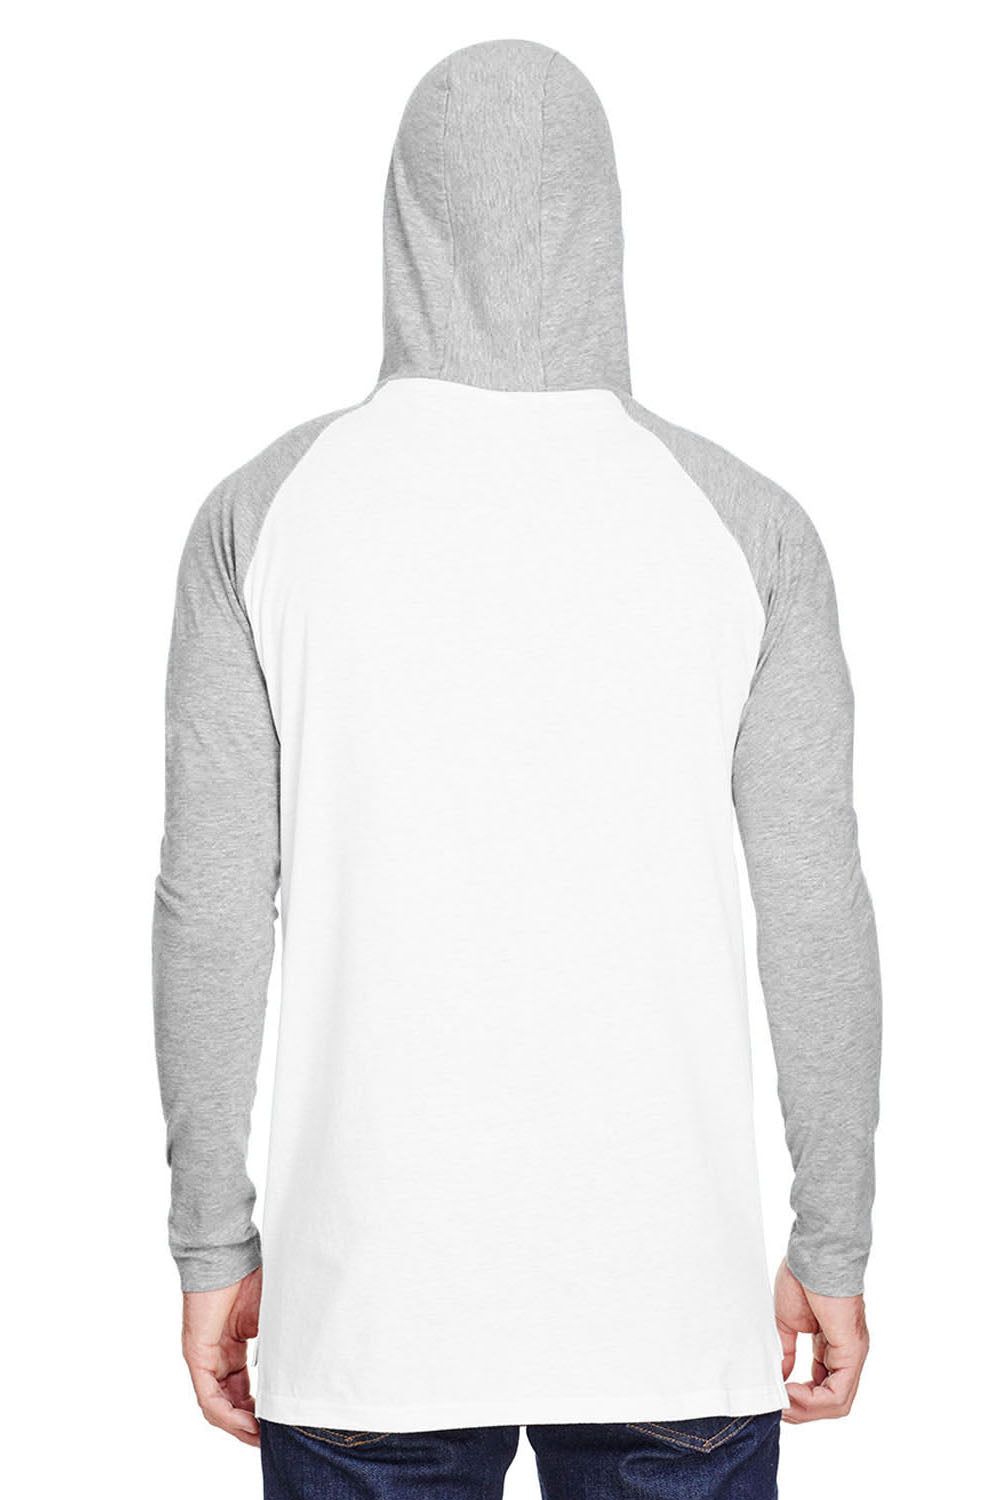 LAT 6917 Mens Fine Jersey Hooded Sweatshirt White/Heather Grey Back